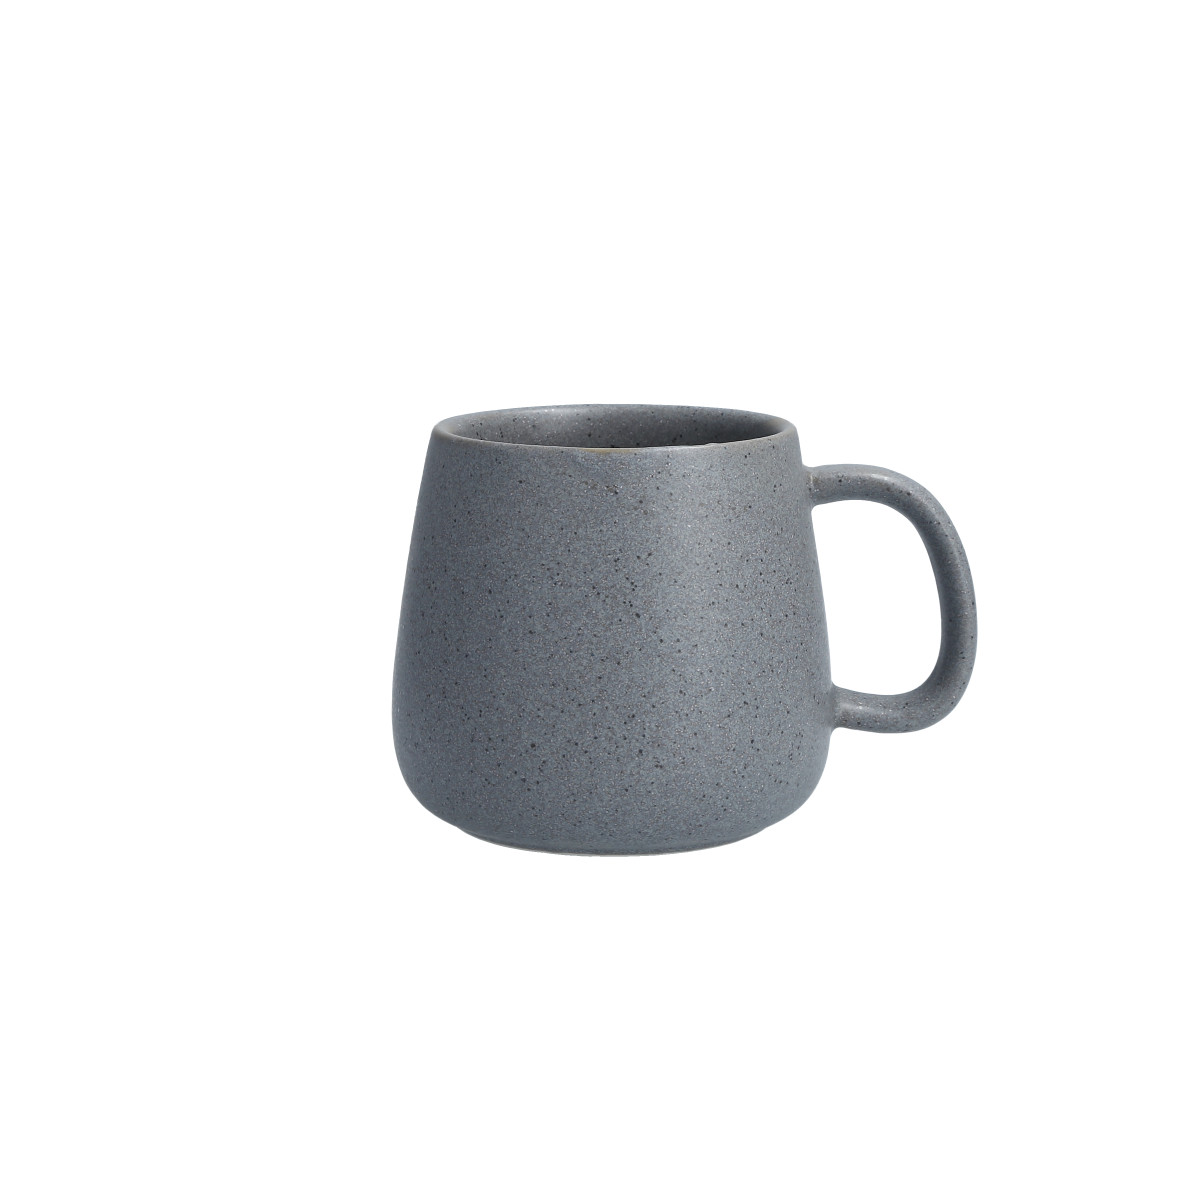 Sound Mug, Cement, Set of 4